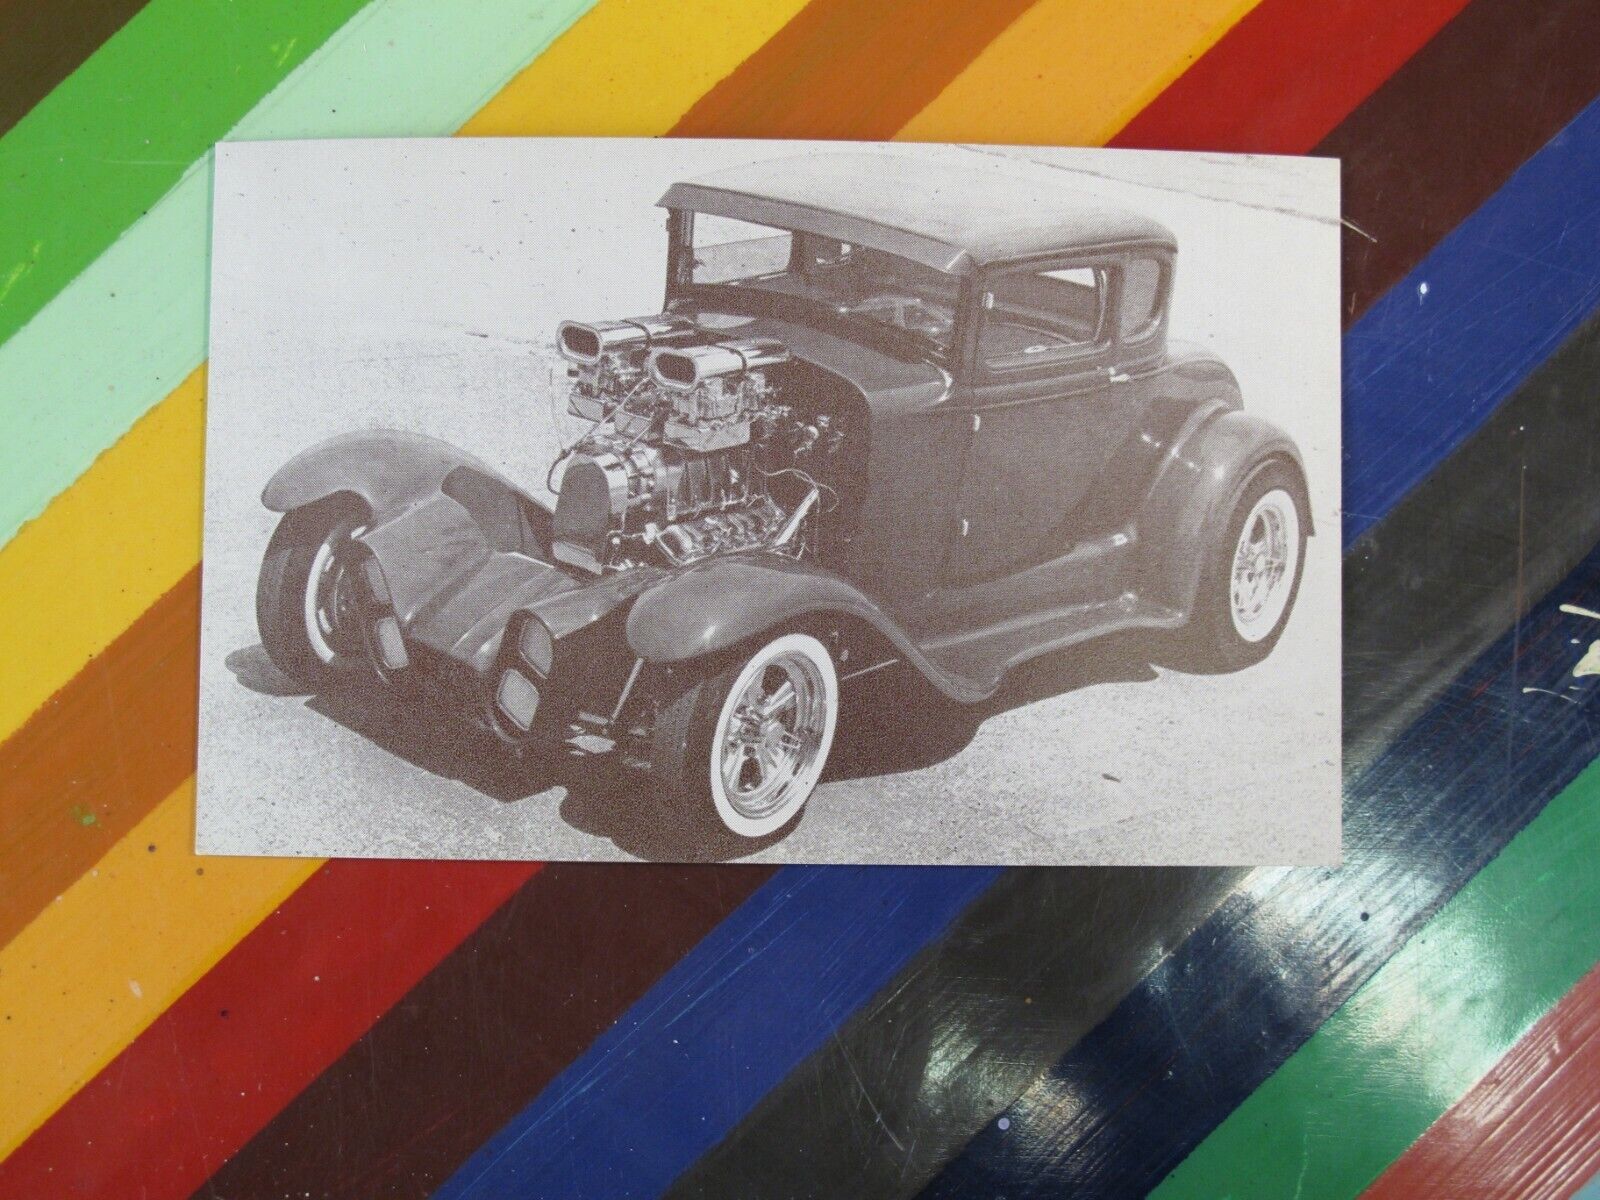 vtg 1960s Hot Rod cards postcards - Intl. Championship Auto Shows 